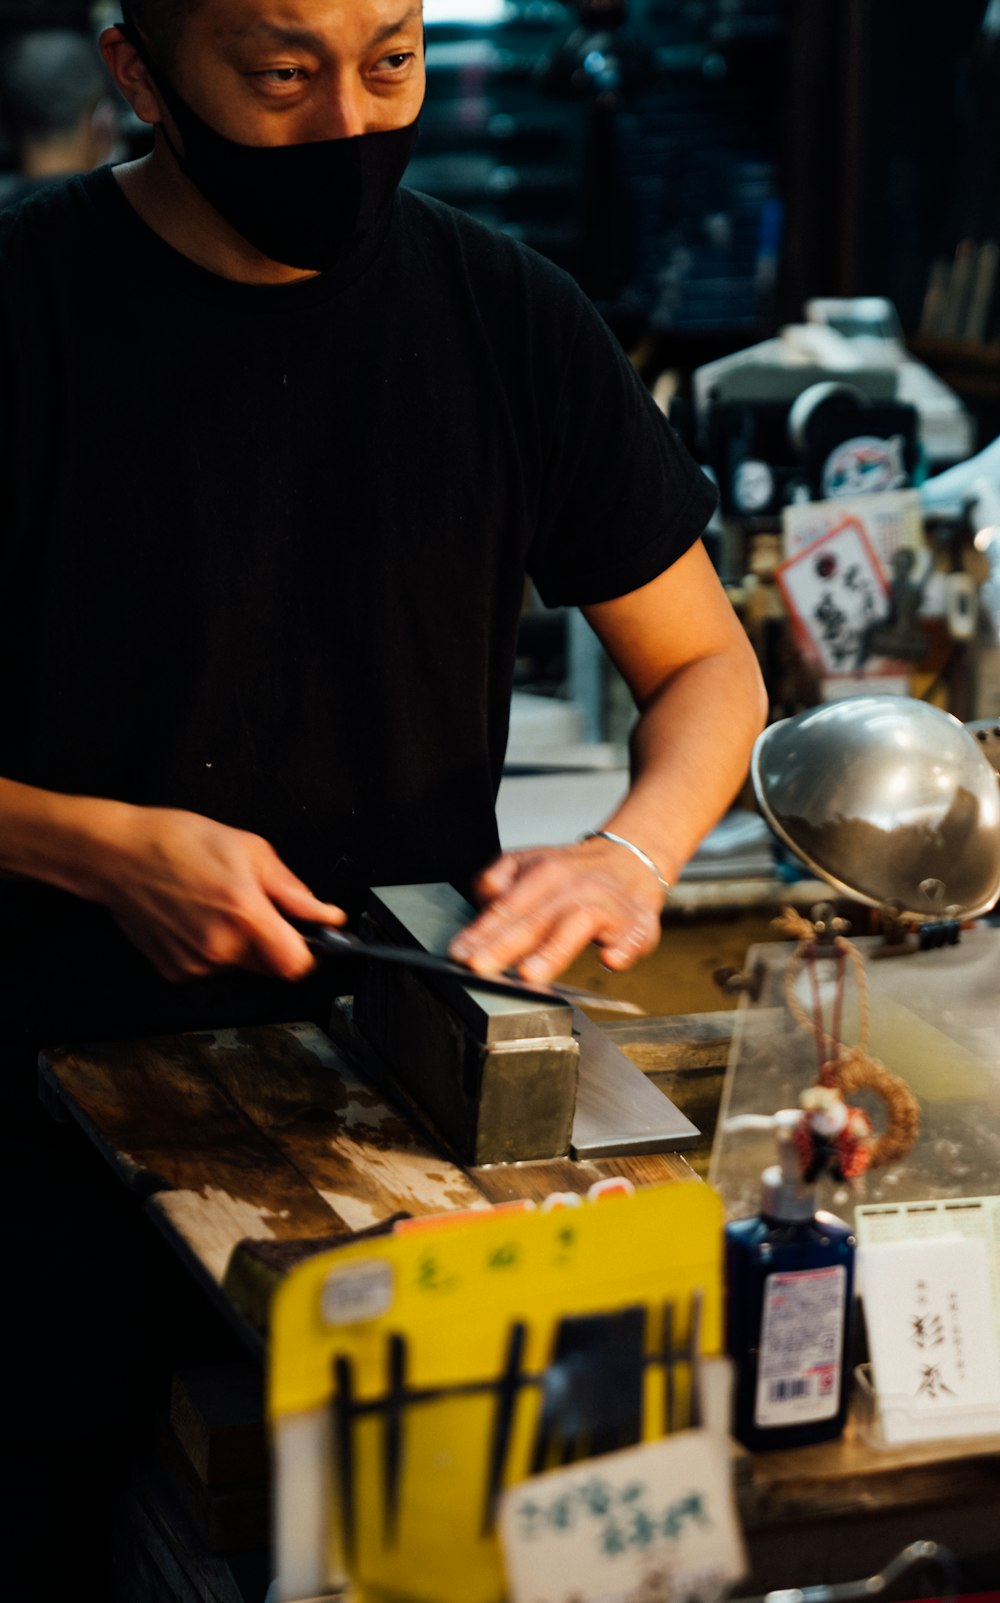 a man in a black shirt is preparing food